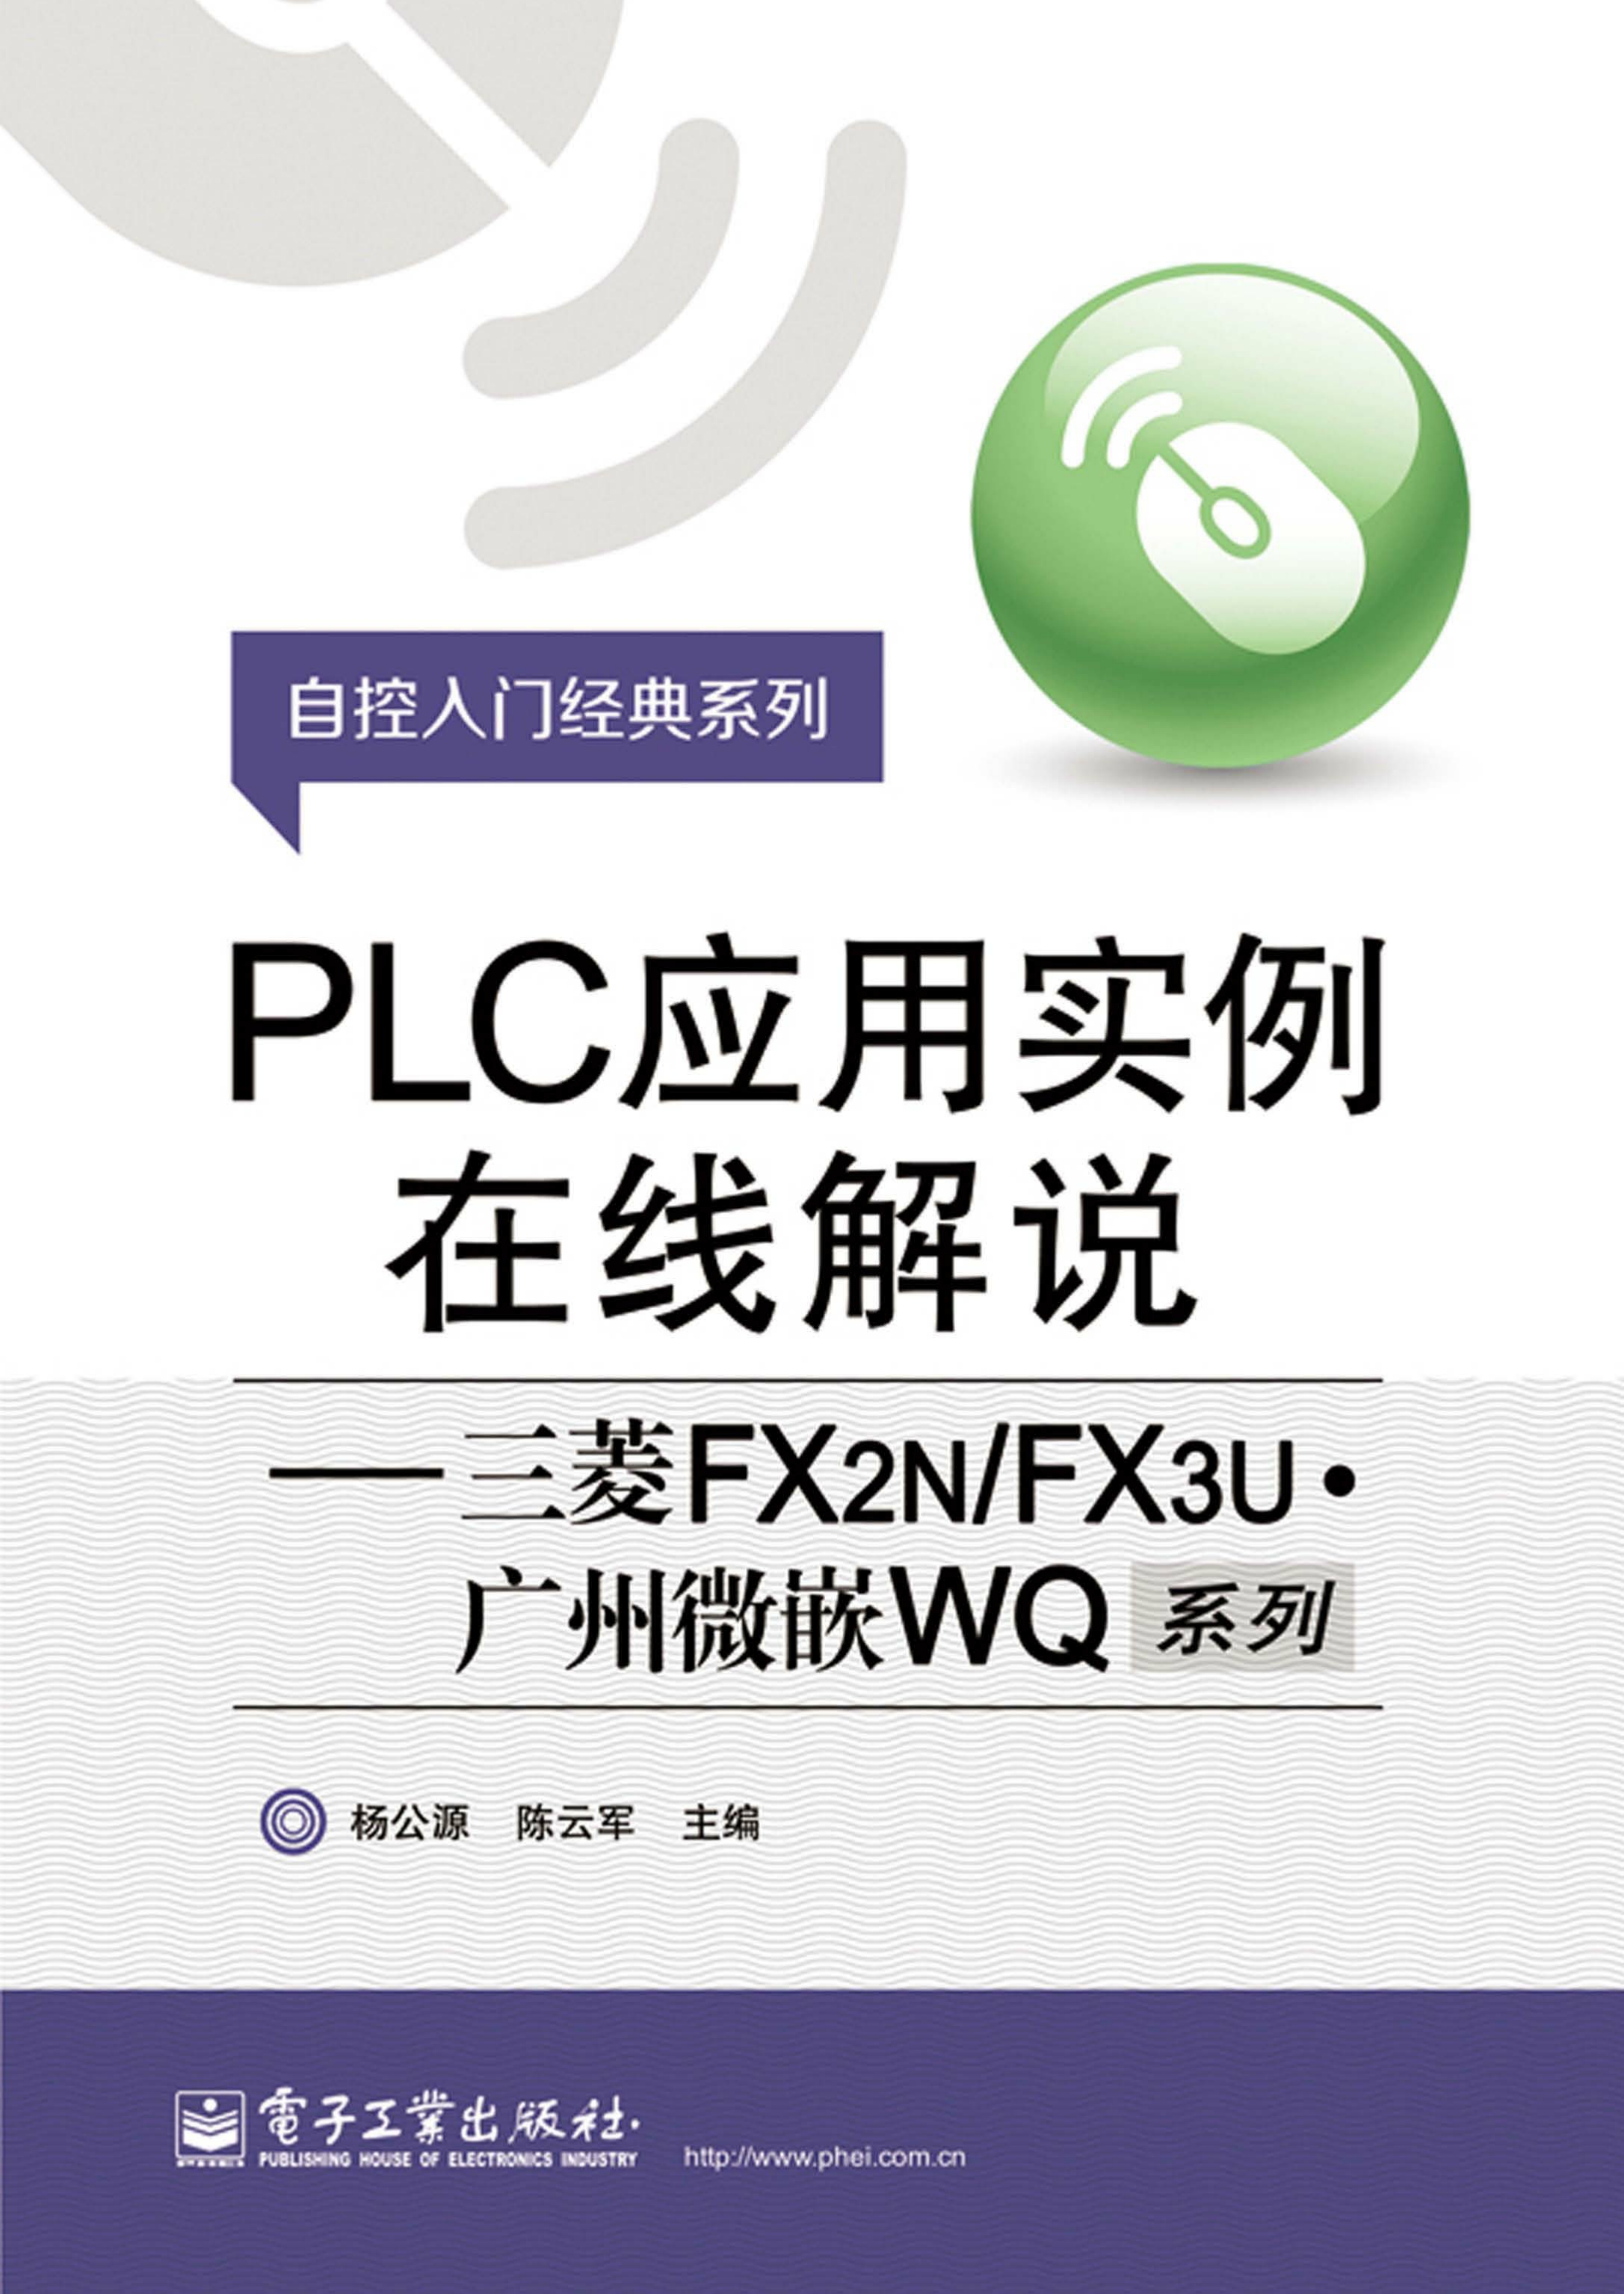 PLC应用实例在线解说——三菱FX2N╱FX3U·广州微嵌WQ系列